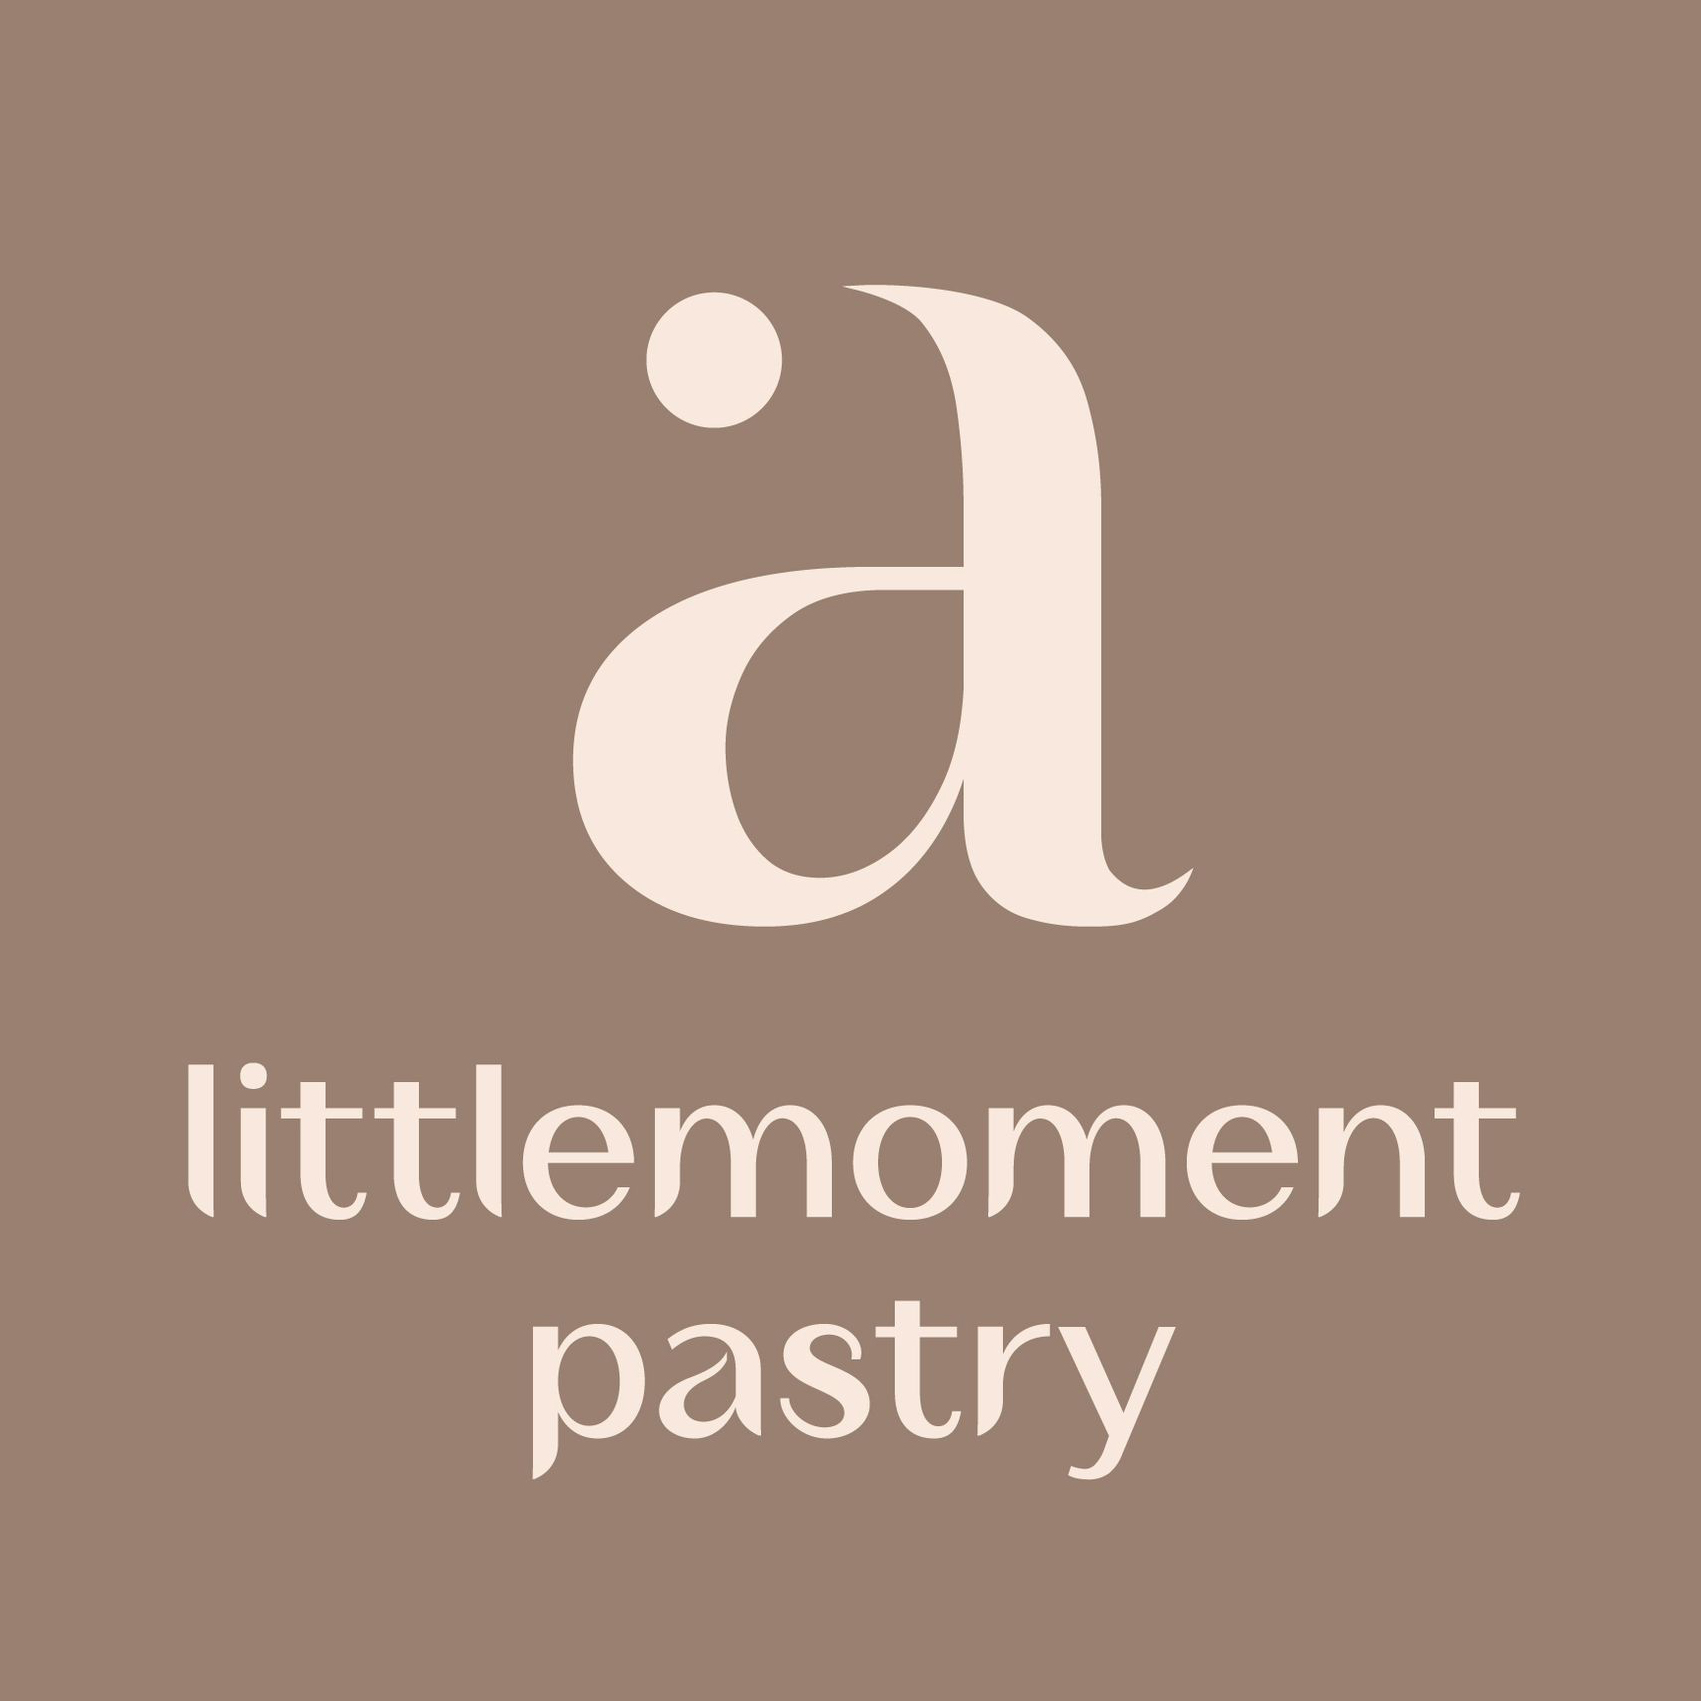 A.littlemoment.pastry 